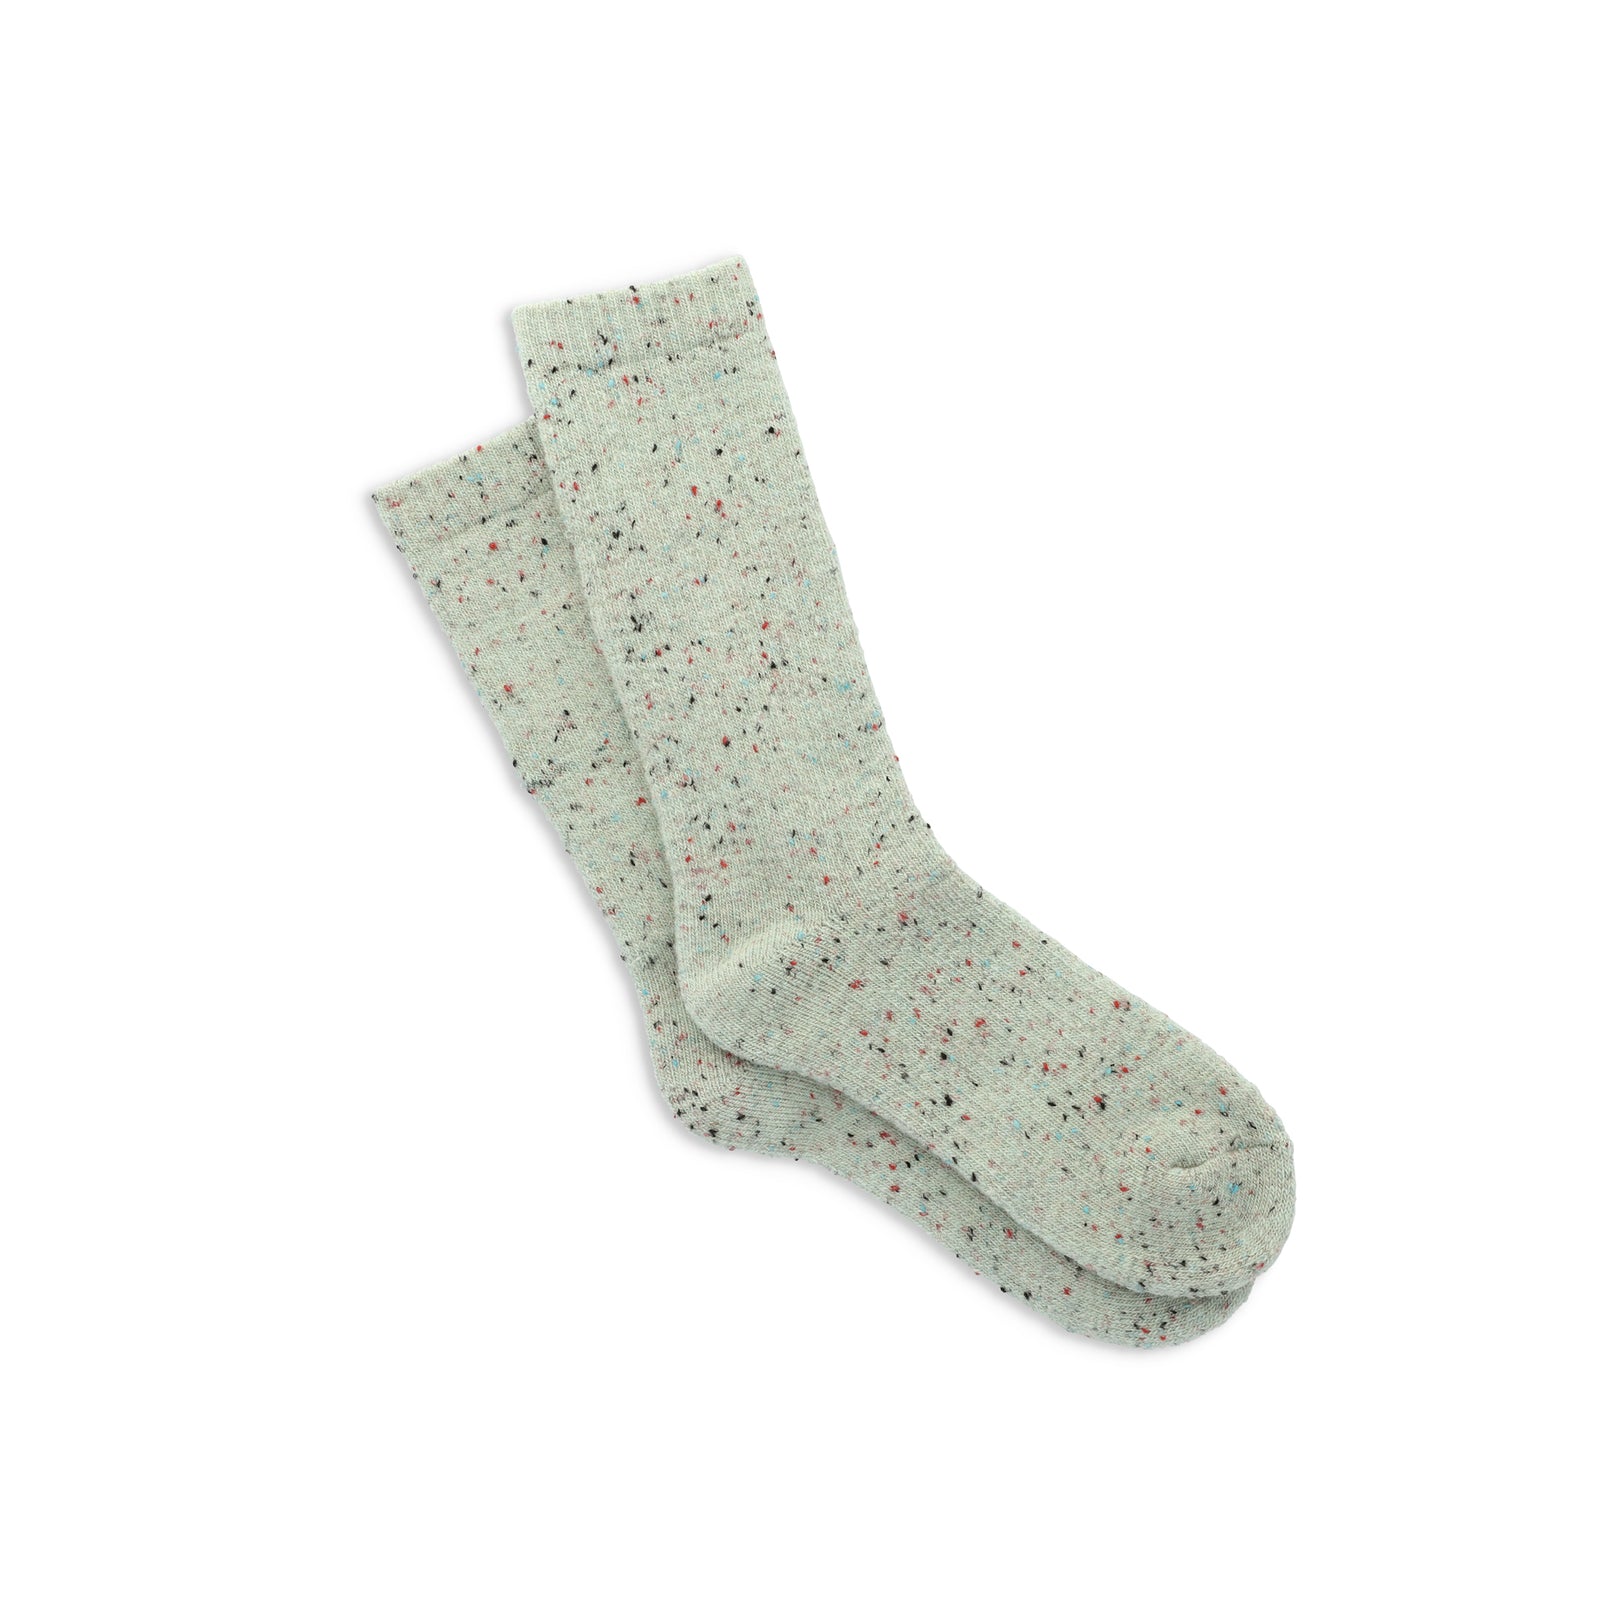 Topo Designs Mountain Socks in "Light Mint".